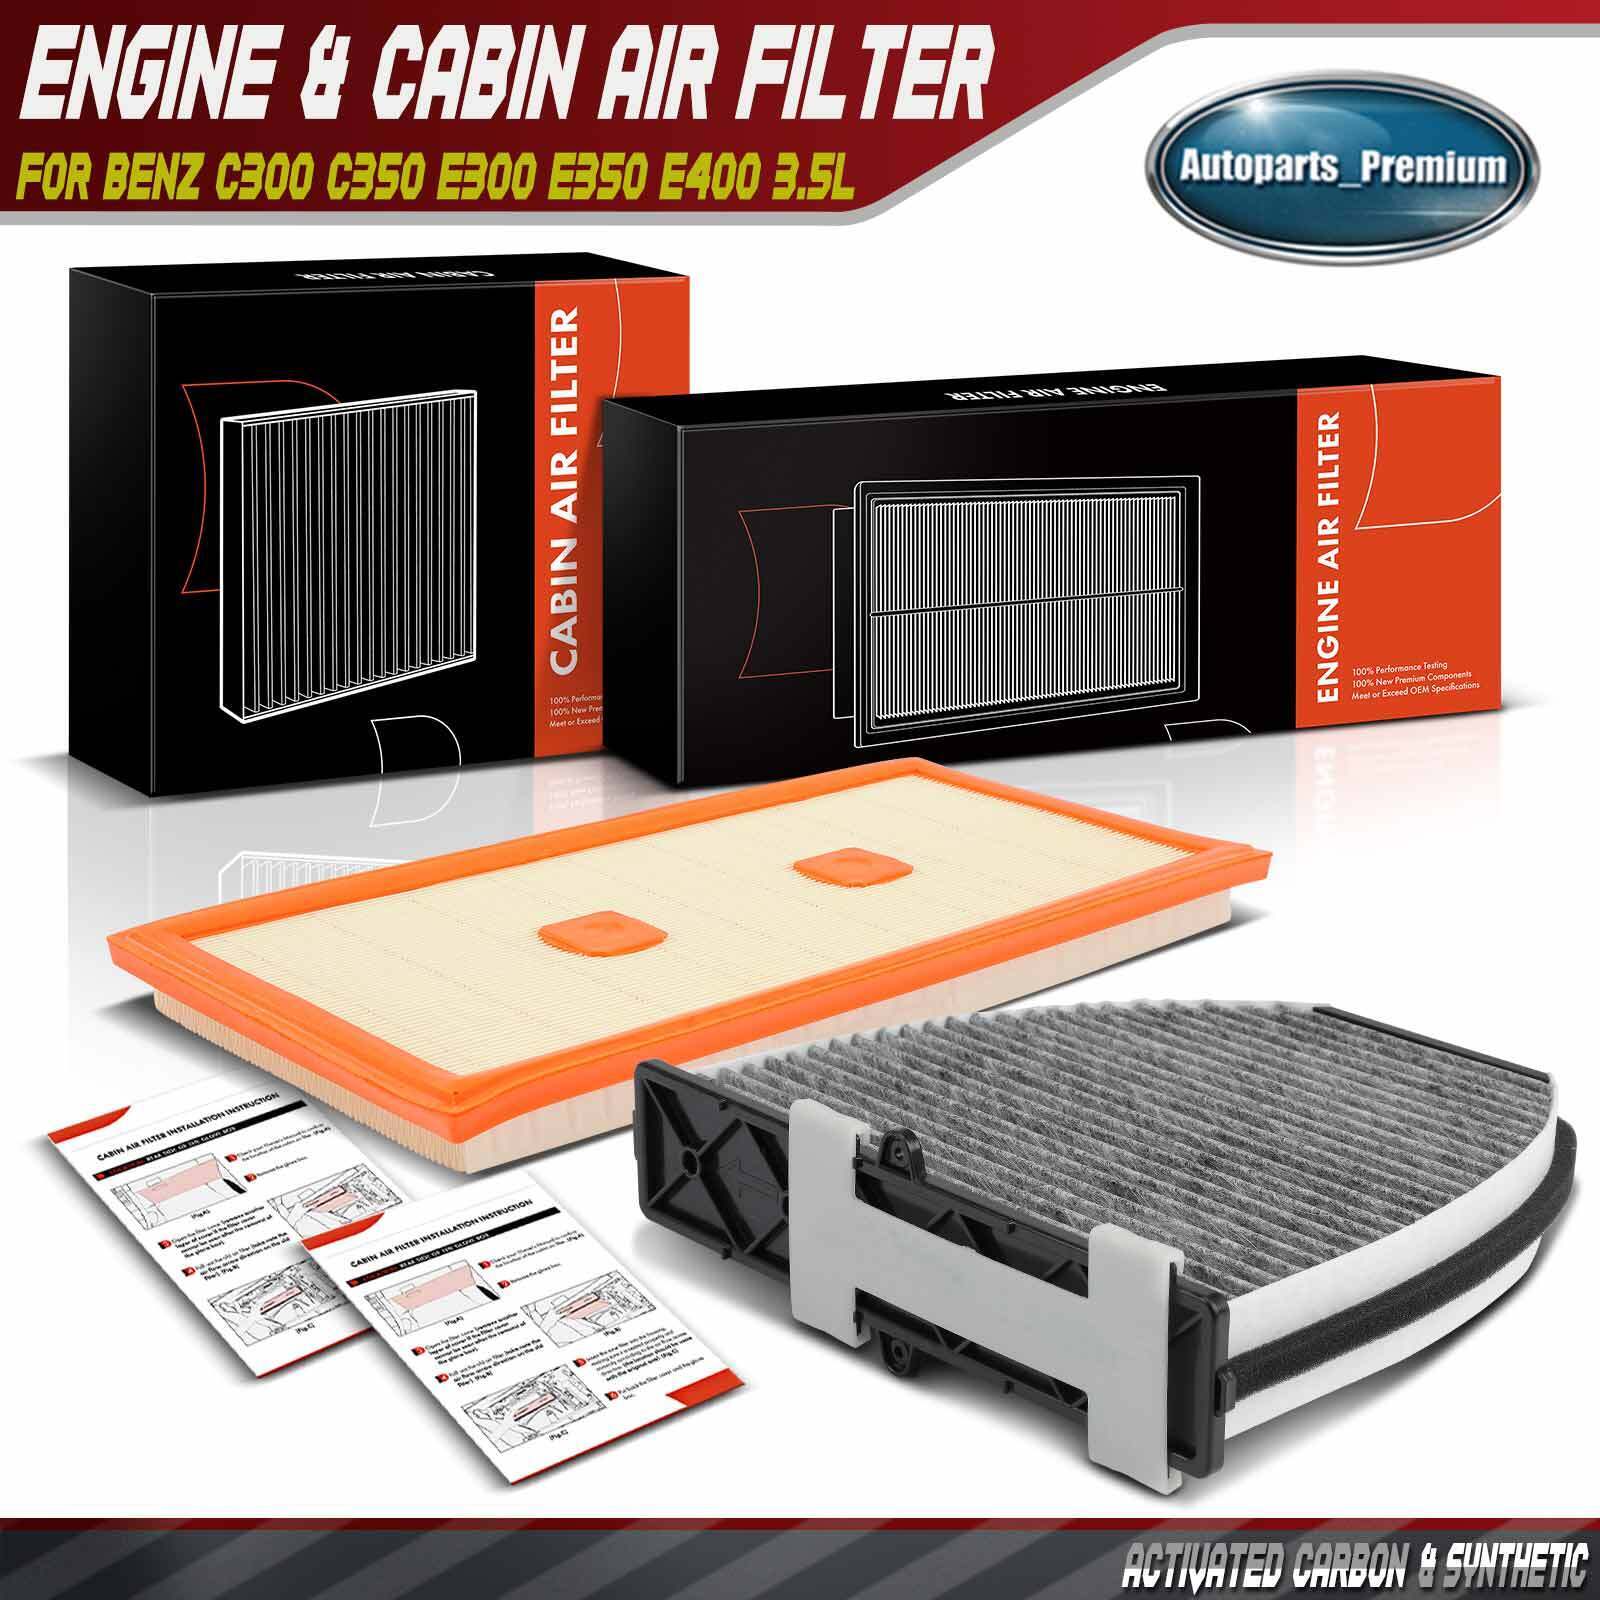 Engine & Cabin Air Filter for Mercedes-Benz C300 C350 E300 E350 E400 3.5L